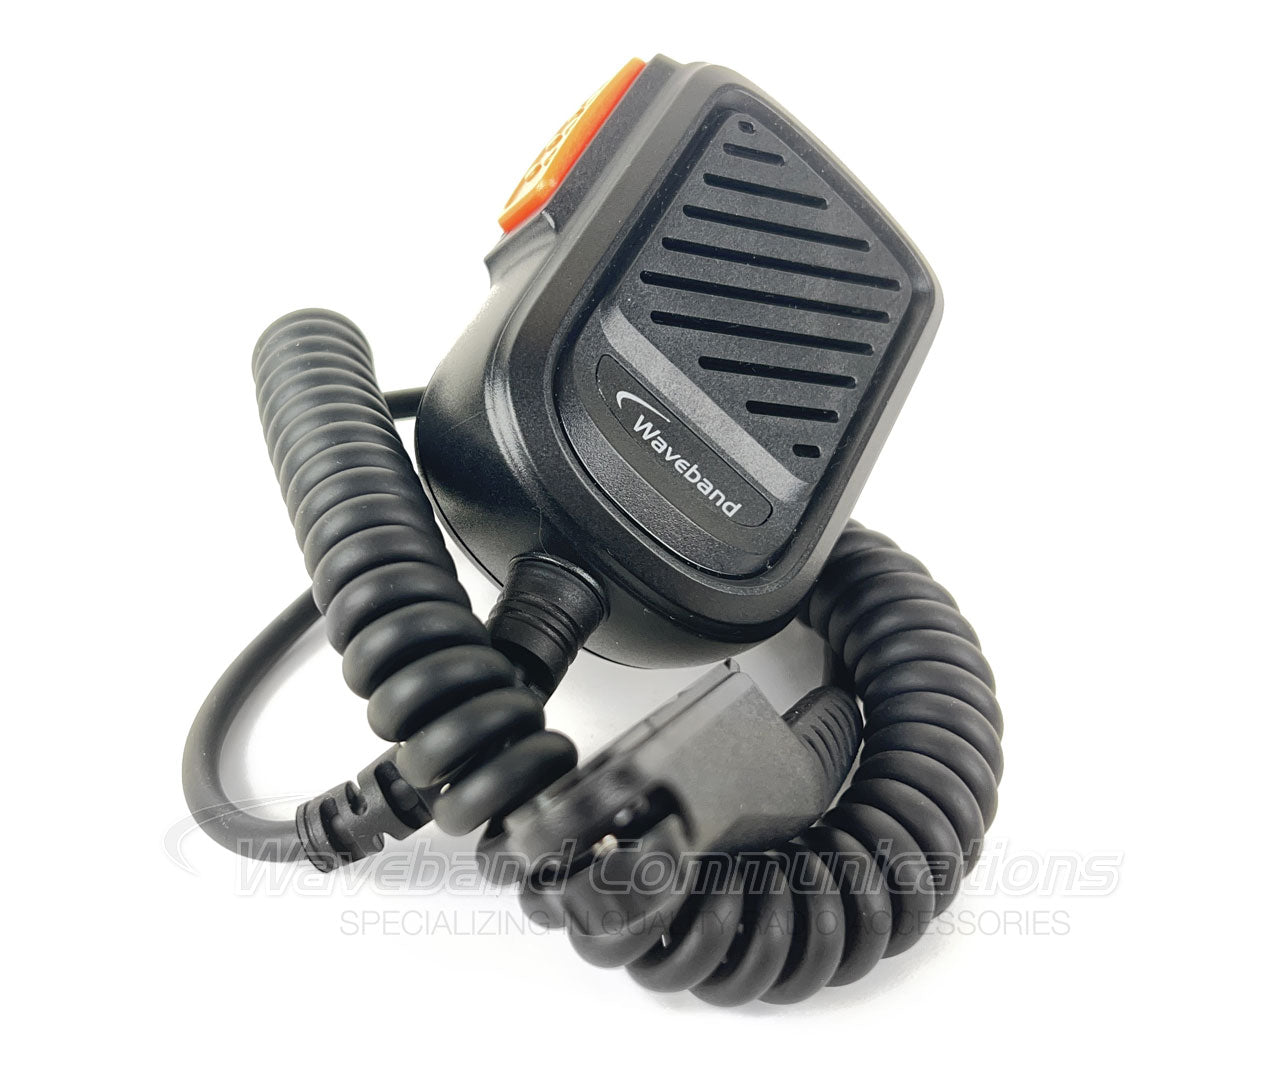 Motorola PMMN4140 Comparable Heavy Duty Speaker Microphone for Motorola R7 Radio